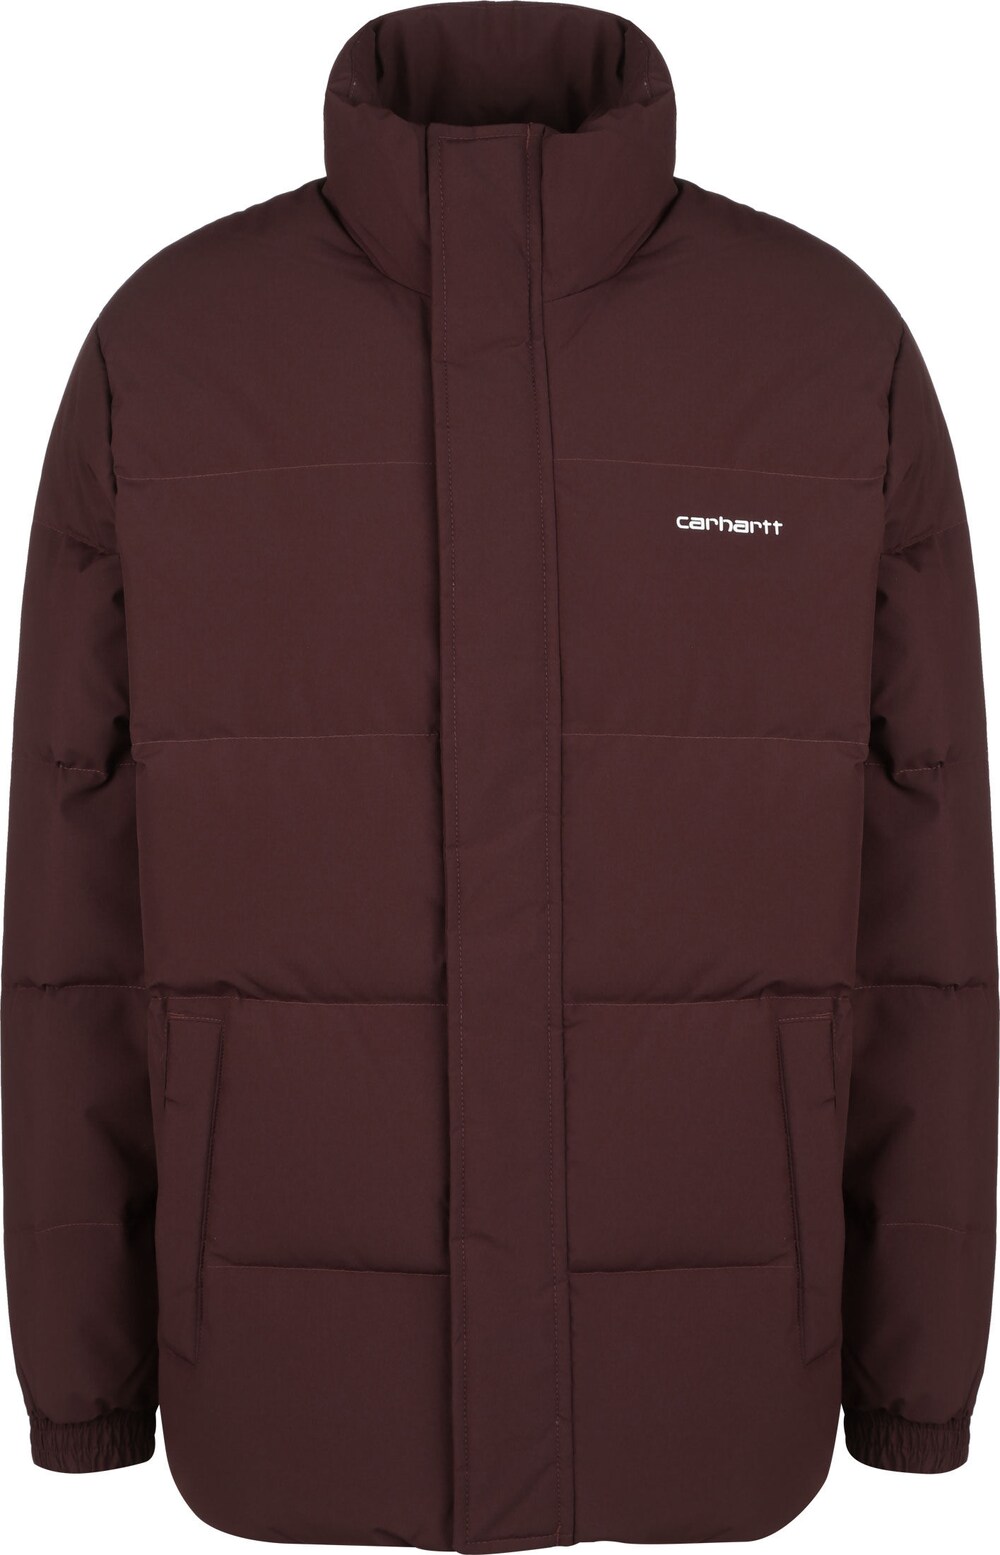 Зимняя куртка Carhartt Wip, коричневый